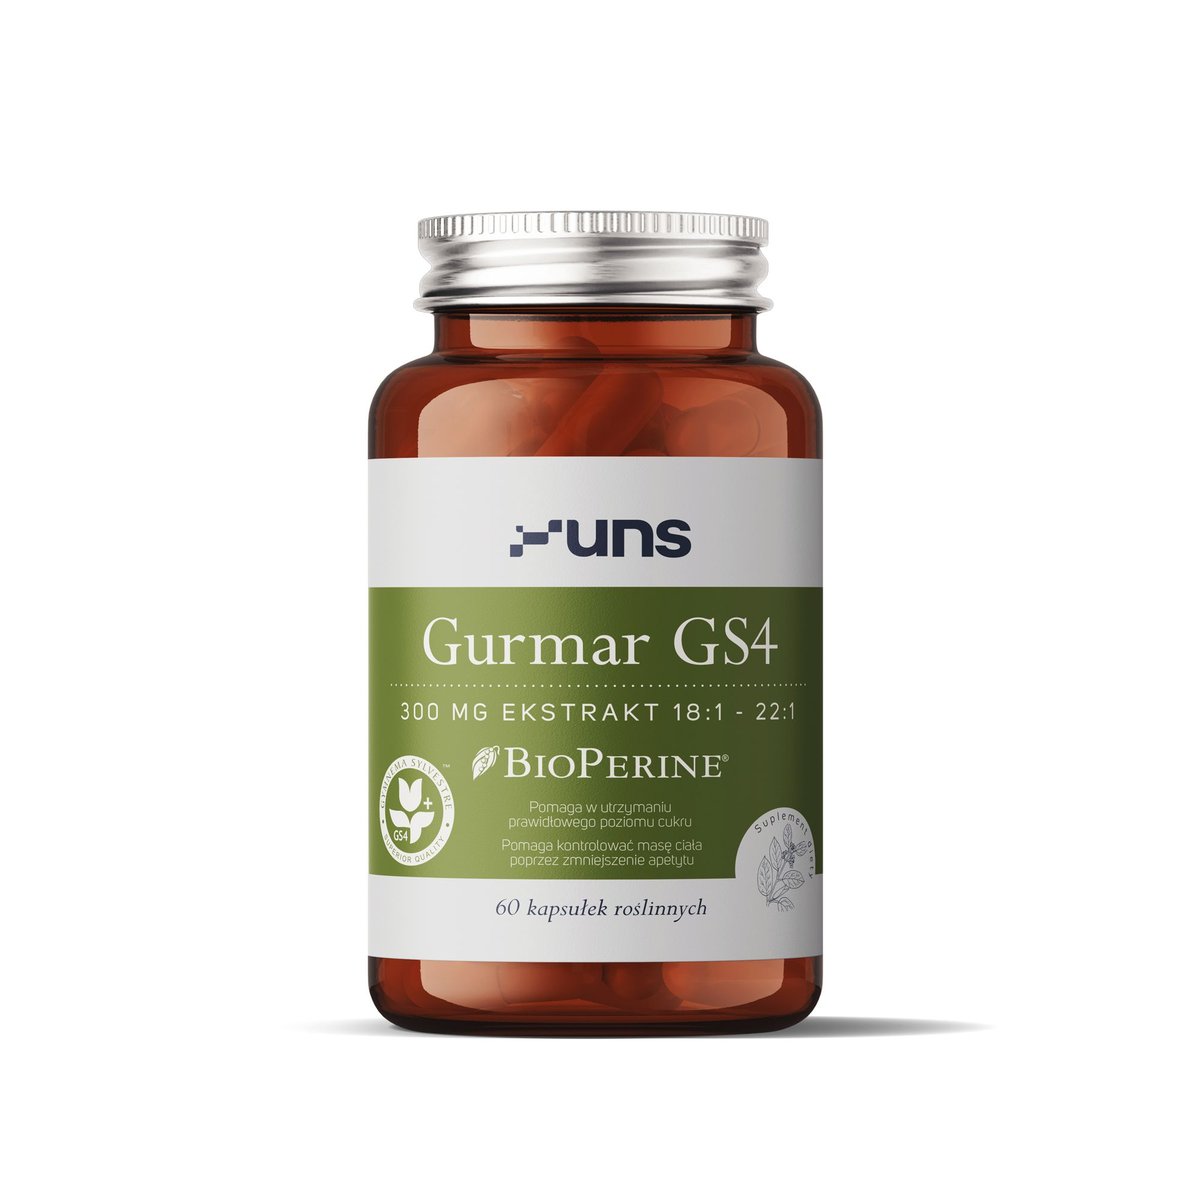 Фото - Вітаміни й мінерали UNS Suplement diety, GURMAR GS4 60 vege kaps. 